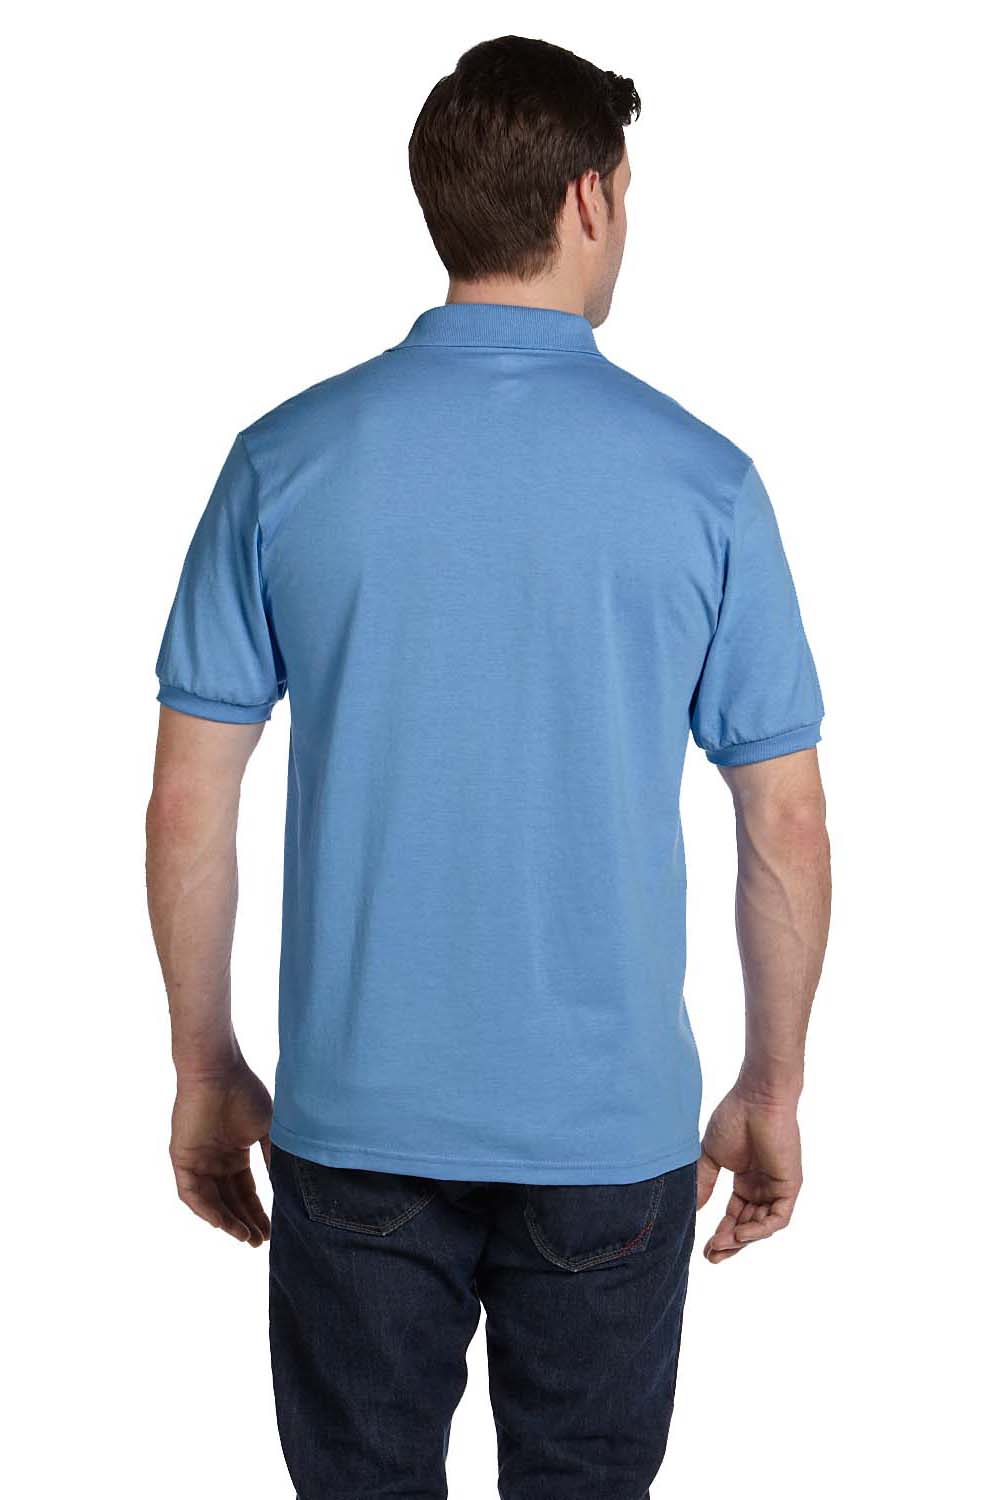 Hanes 054 Mens EcoSmart Short Sleeve Polo Shirt Carolina Blue Back